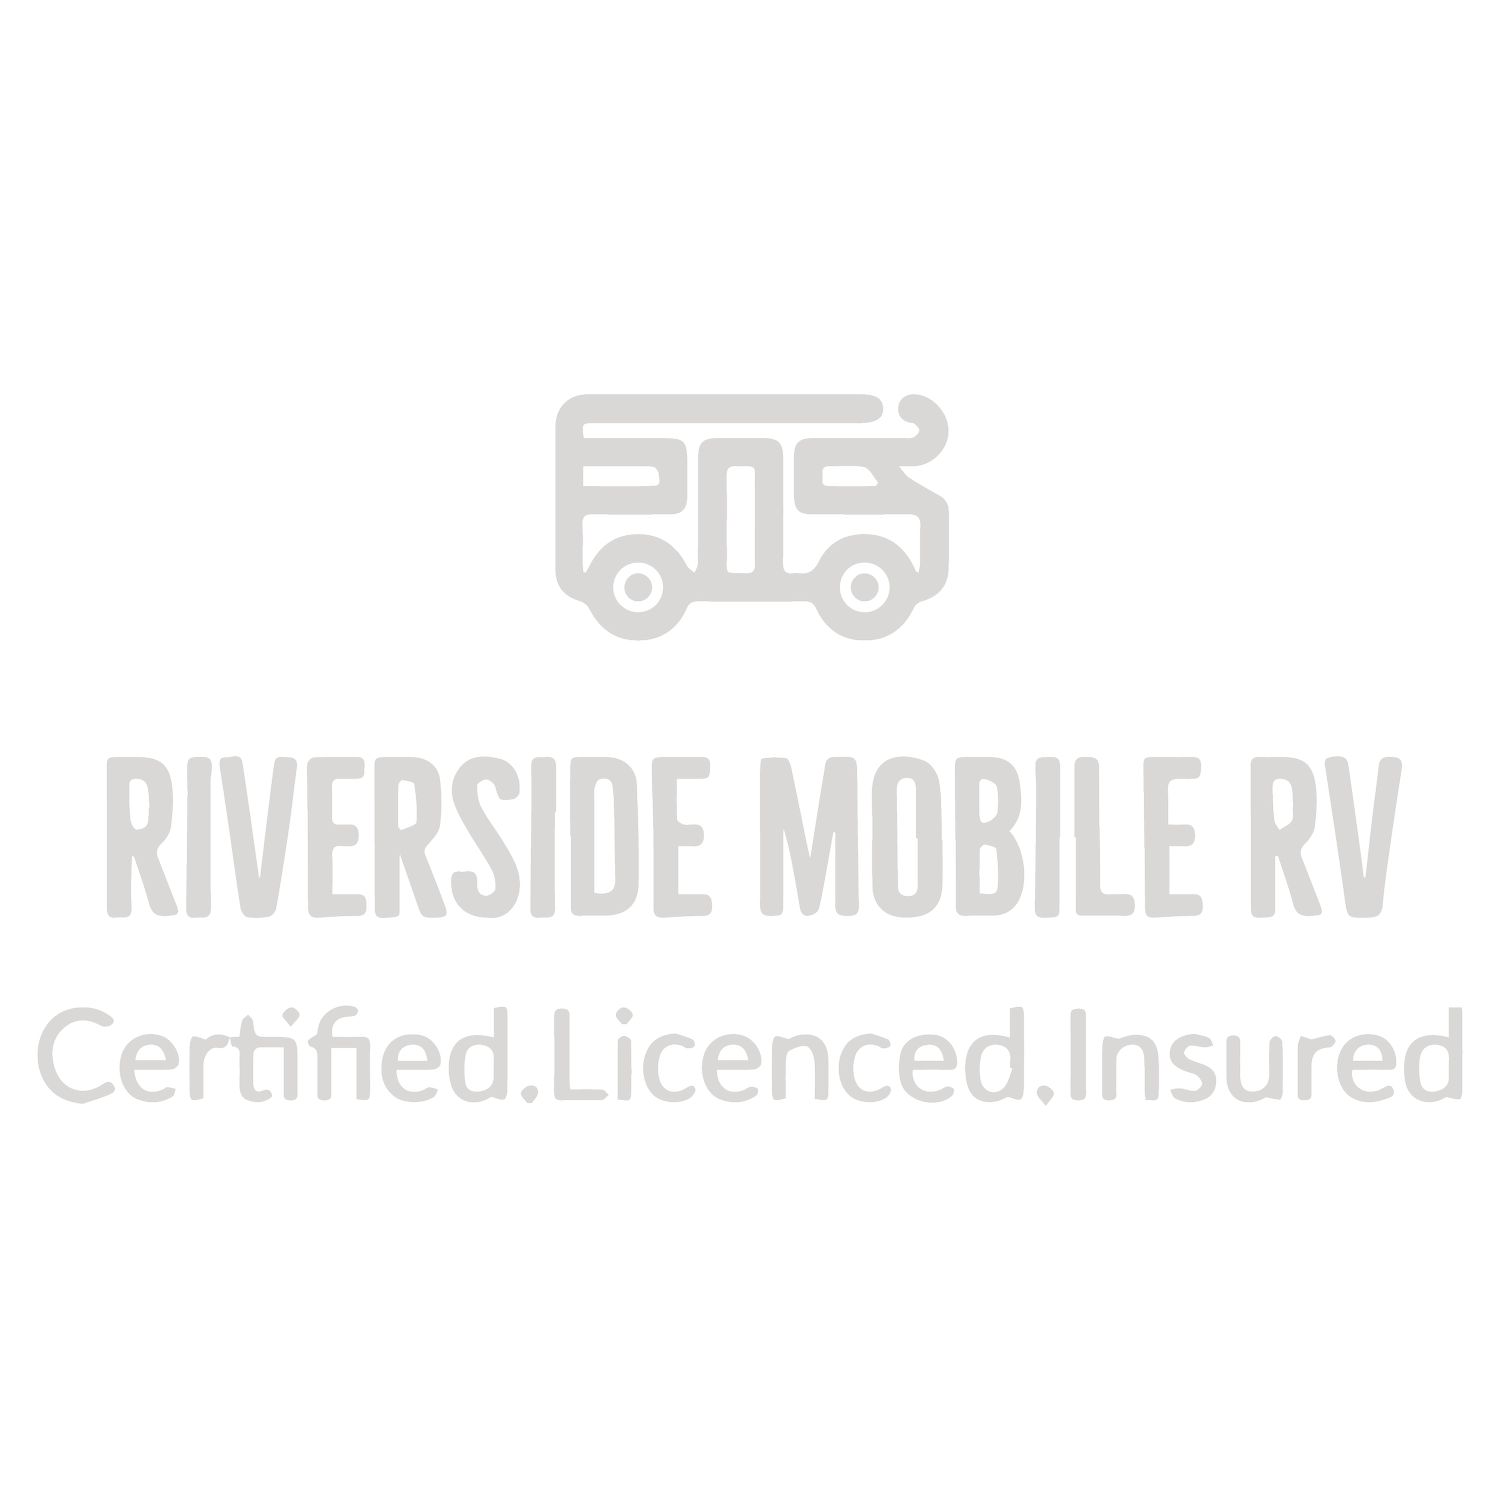 Riverside Mobile RV